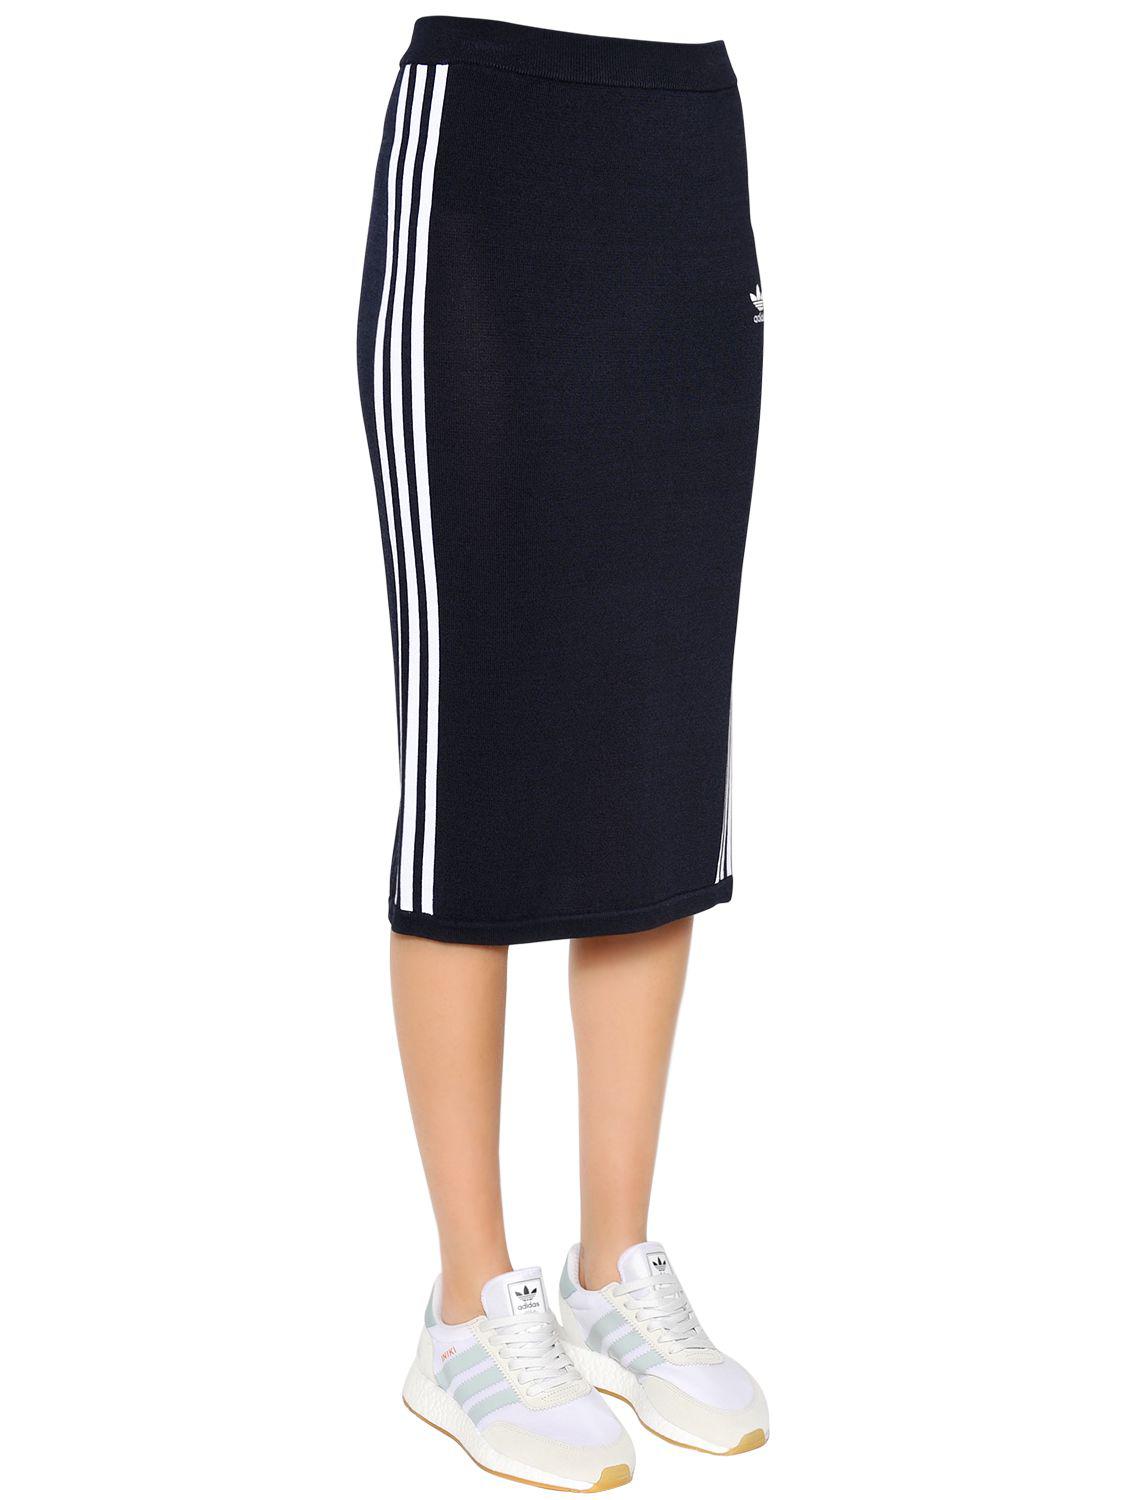 adidas Originals 3 Stripes Knit Midi Skirt in Navy (Blue) - Lyst